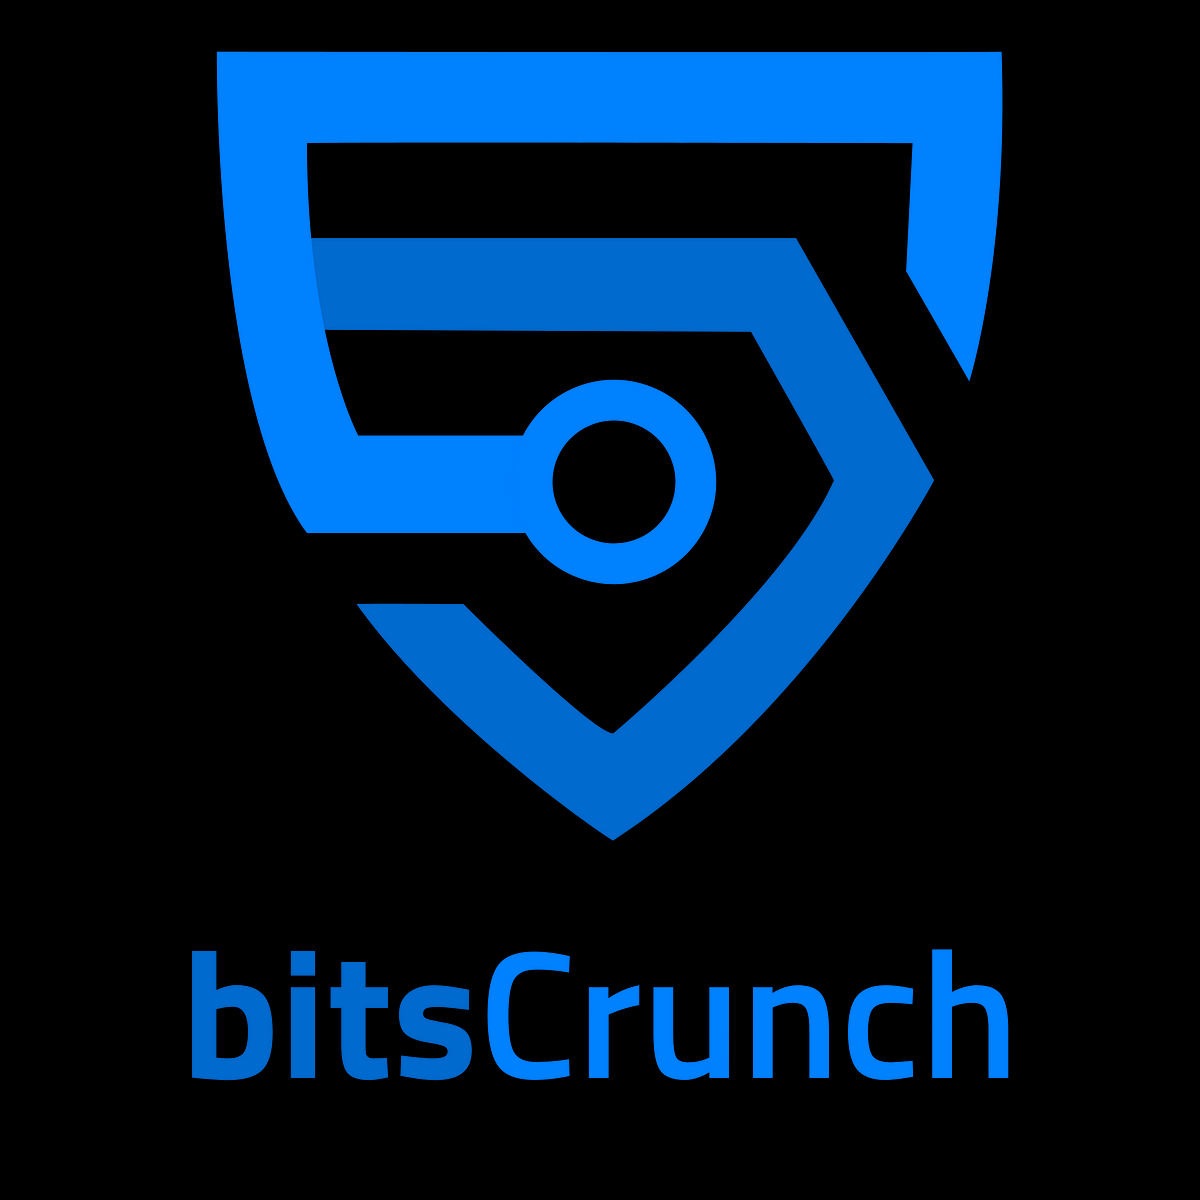 BCUT / bitsCrunch